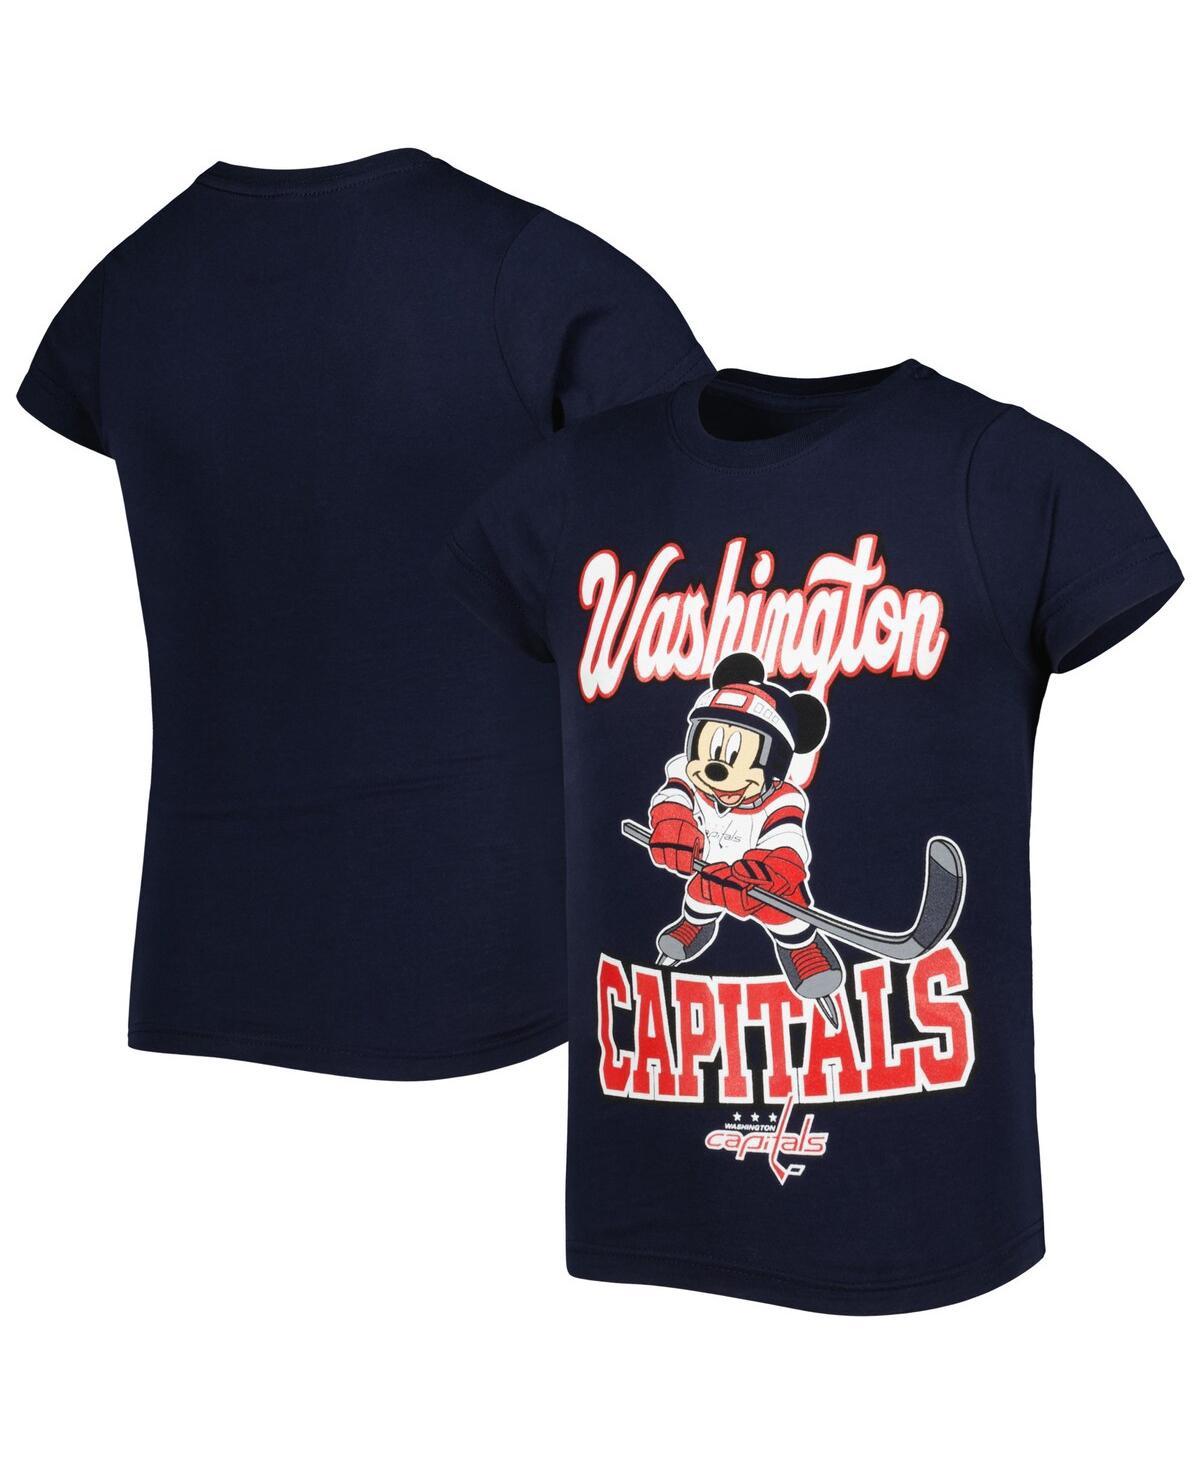 Outerstuff Kids' Big Girls Navy Washington Capitals Mickey Mouse Go Team Go T-shirt